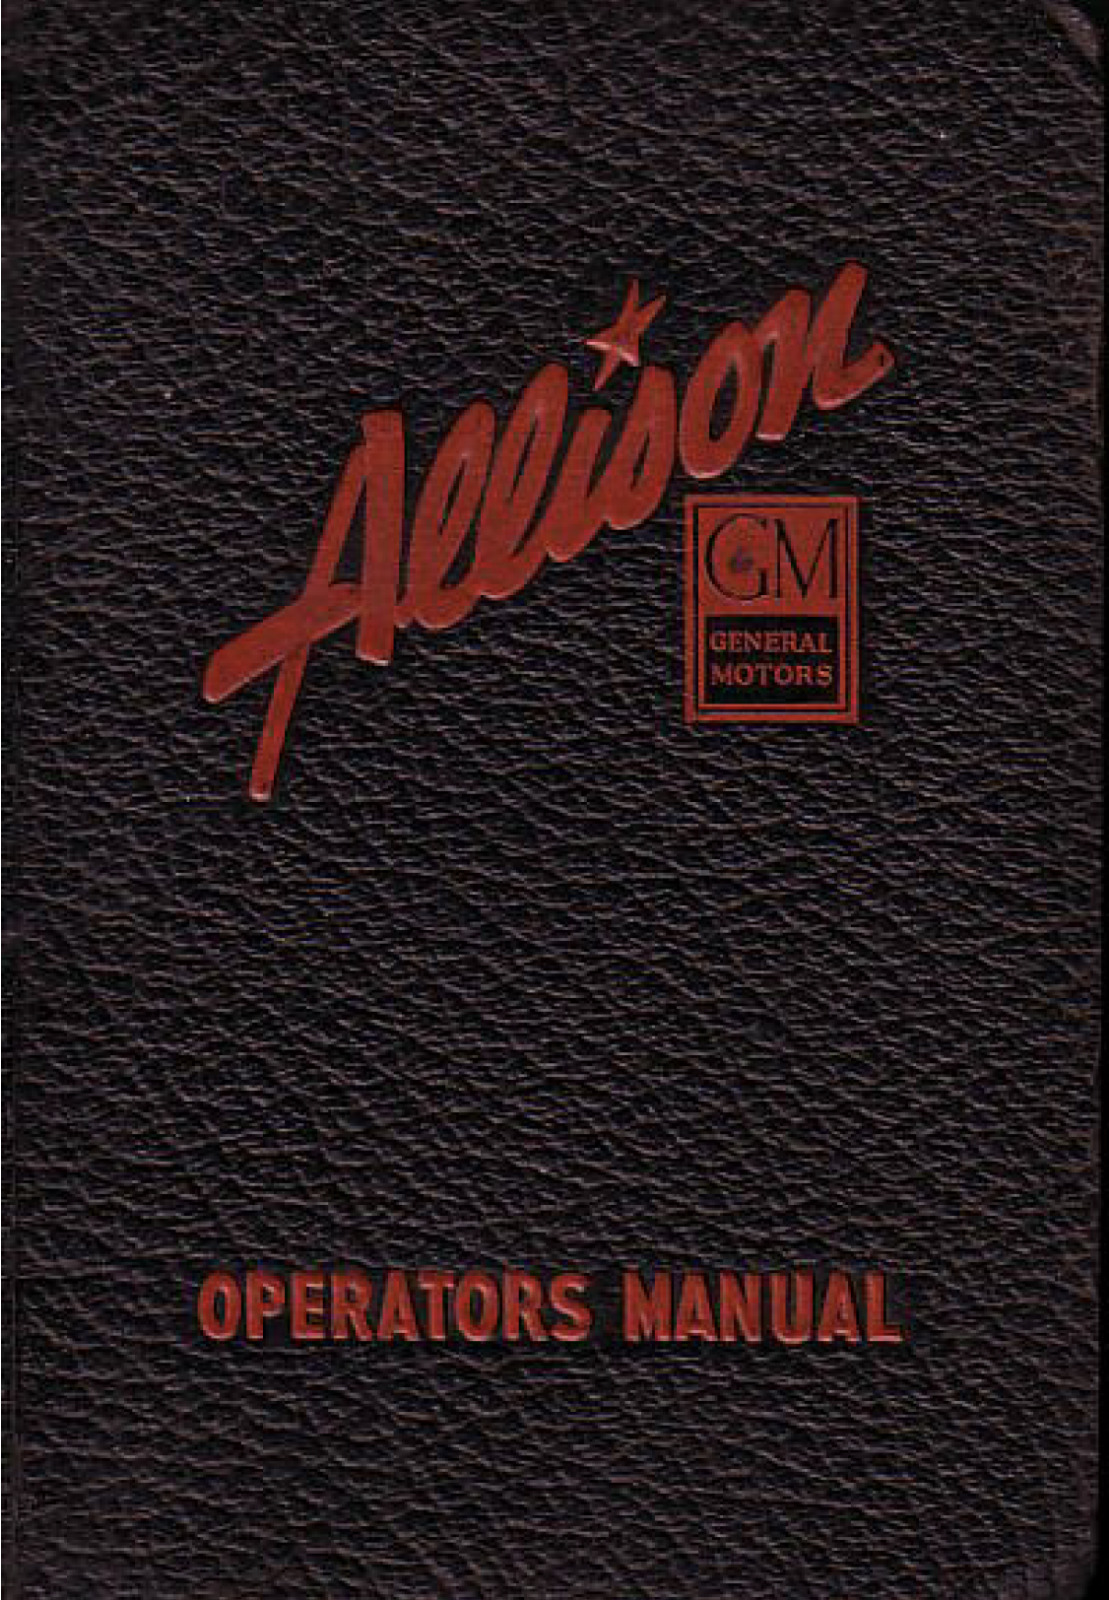 129 Page 1942 GM ALLISON V-1710 Engine Installations Operators Manual on CD